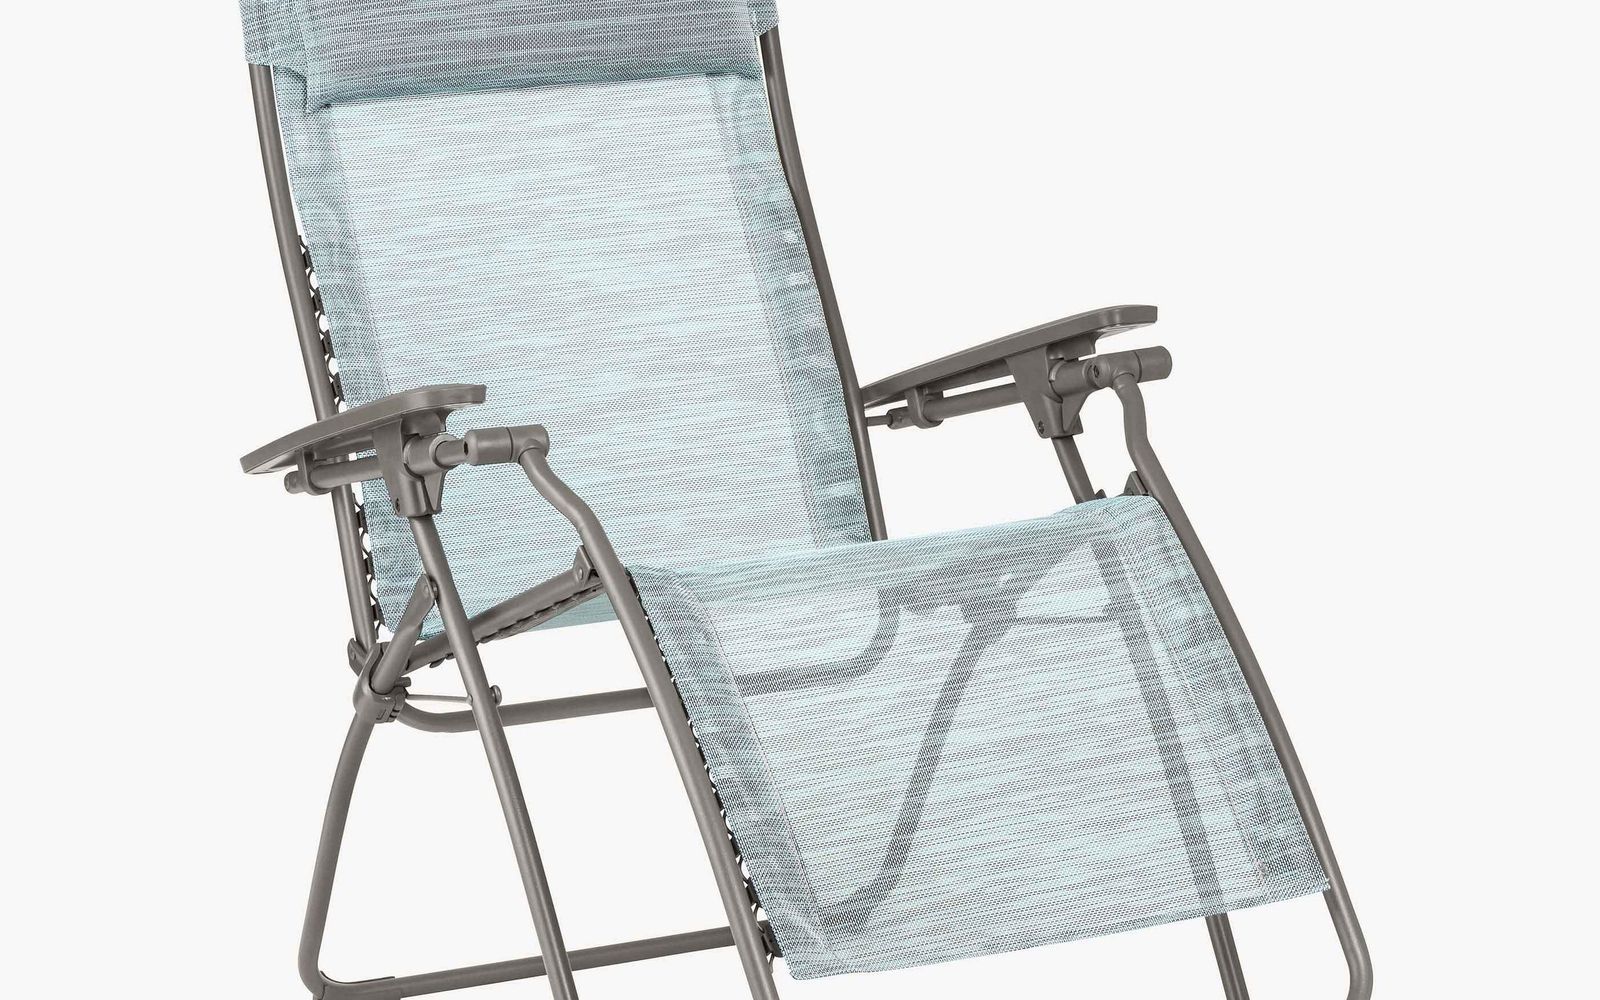 Sample Zero gravity chair jd williams for Renovation